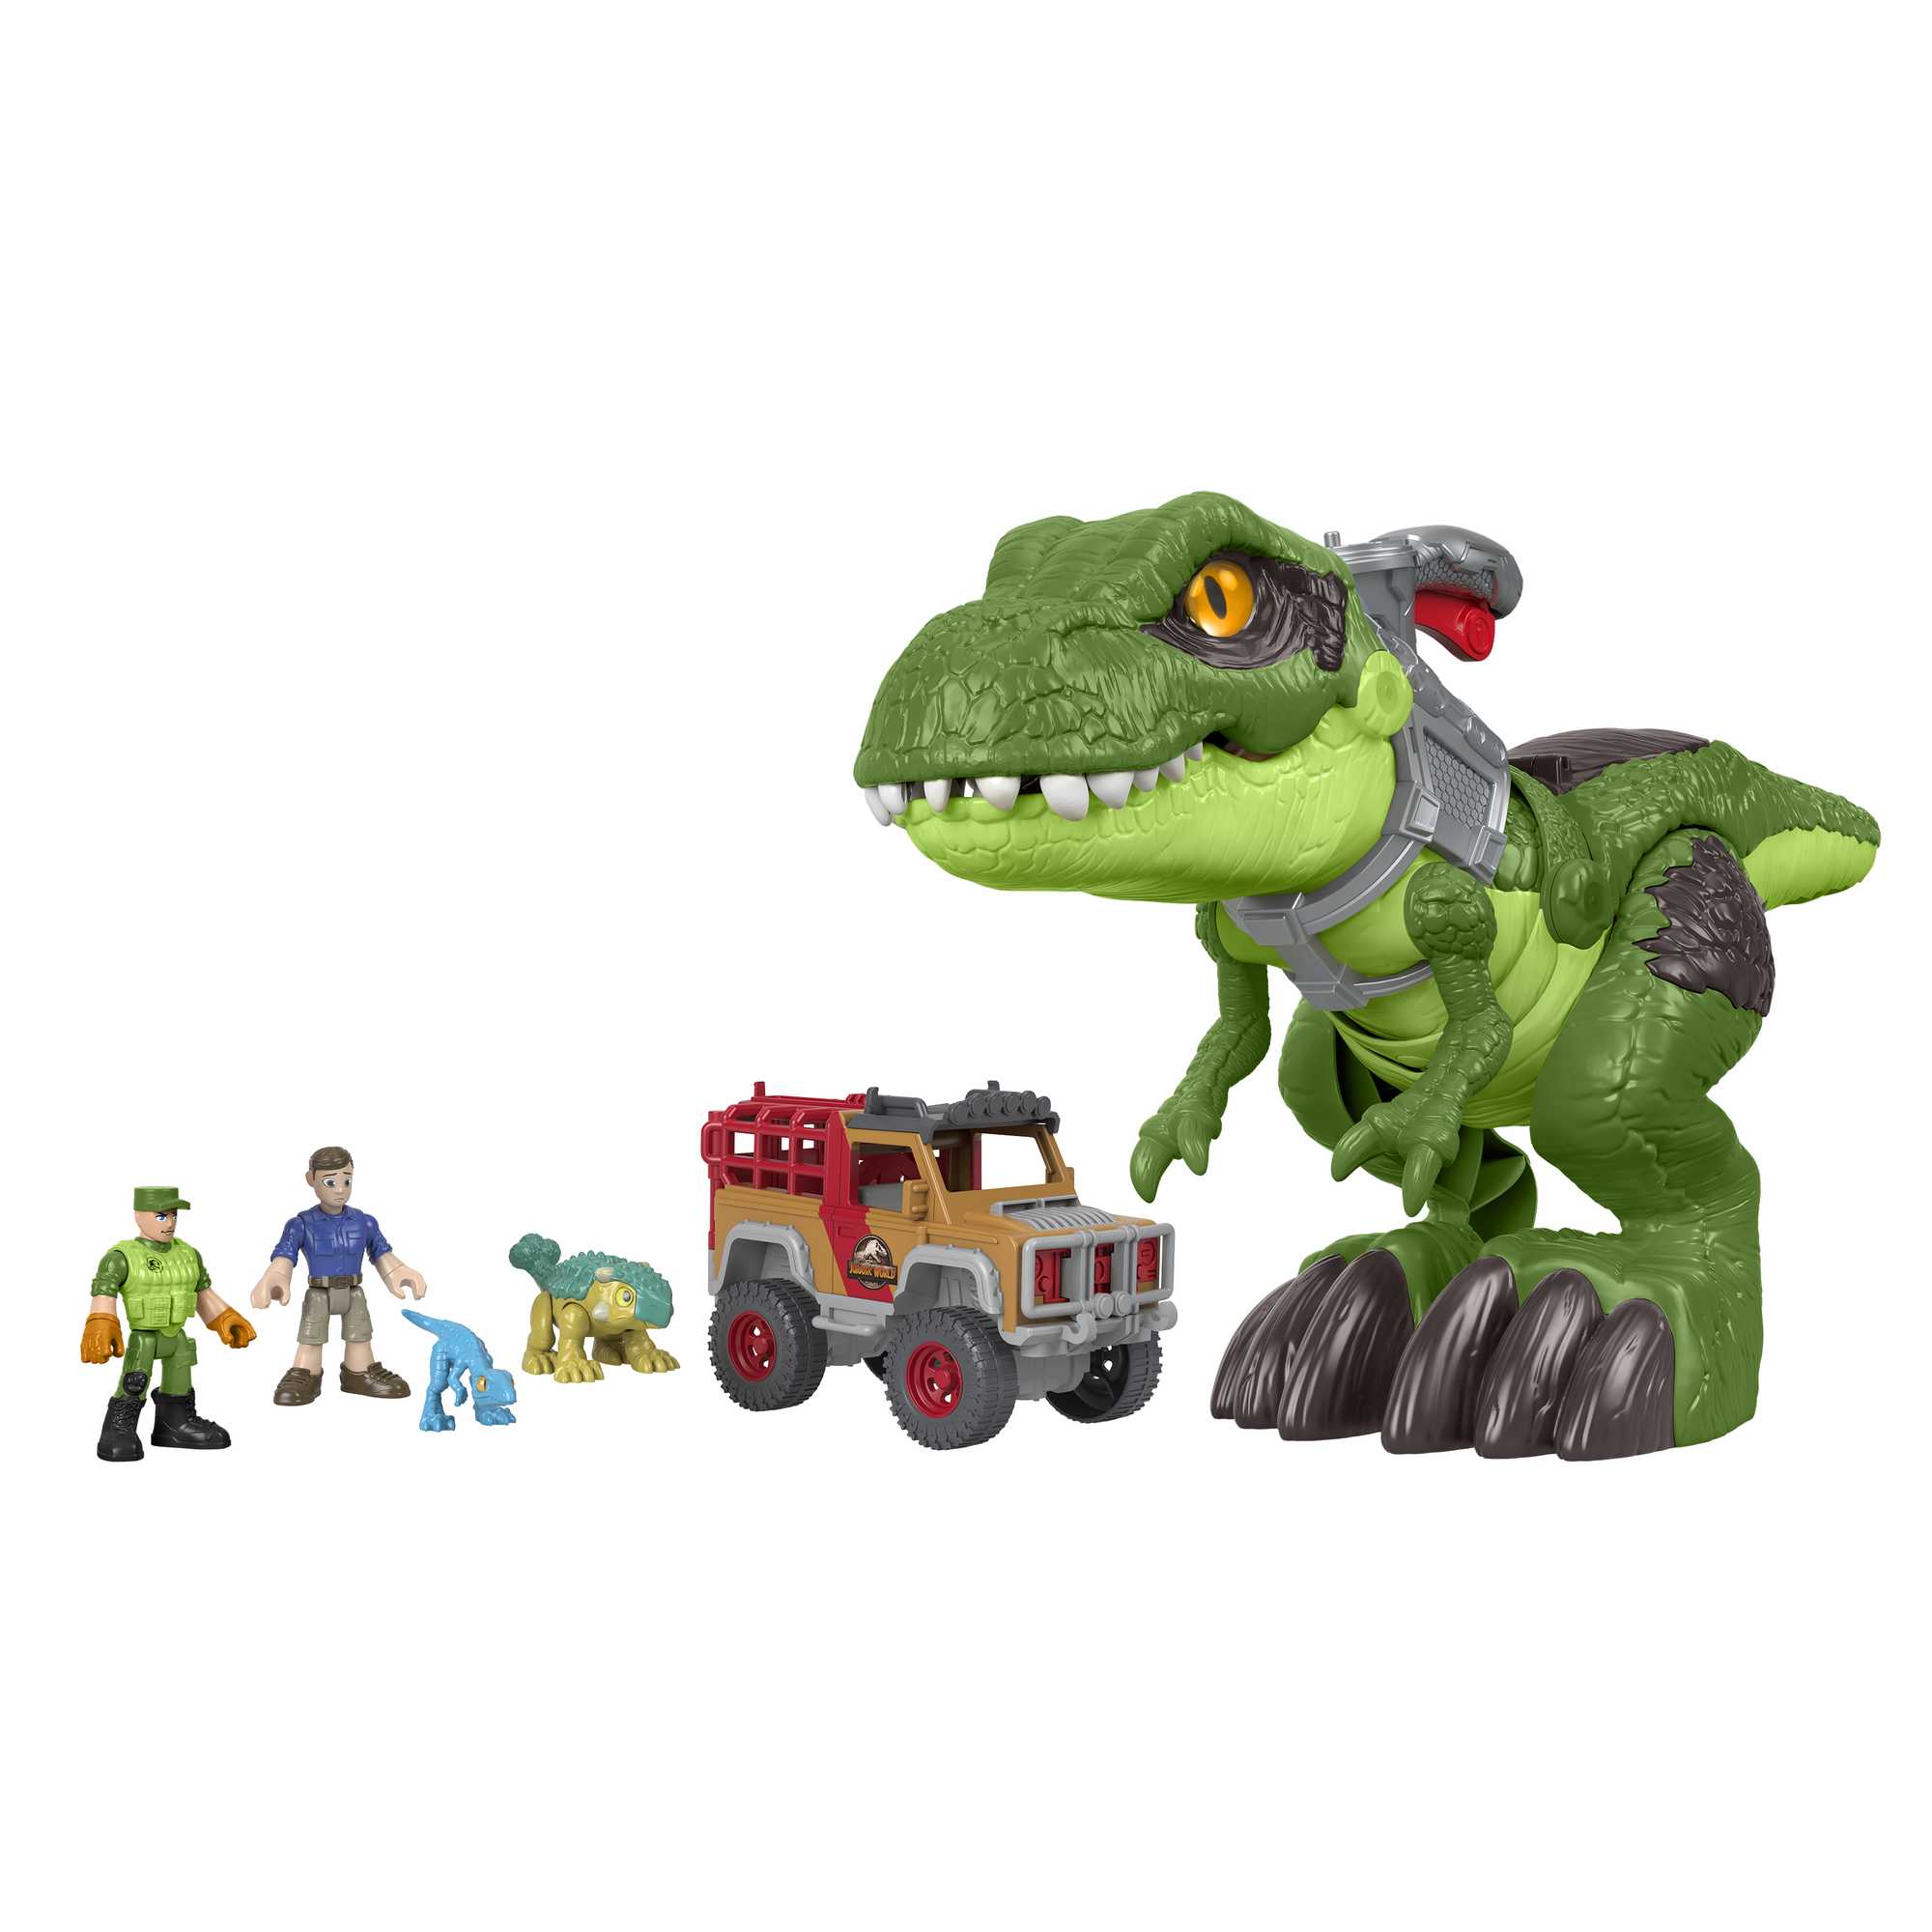 Imaginext Jurassic World Indominus Rex Dinosaur Toy with Thrashing Action  for Preschool Child